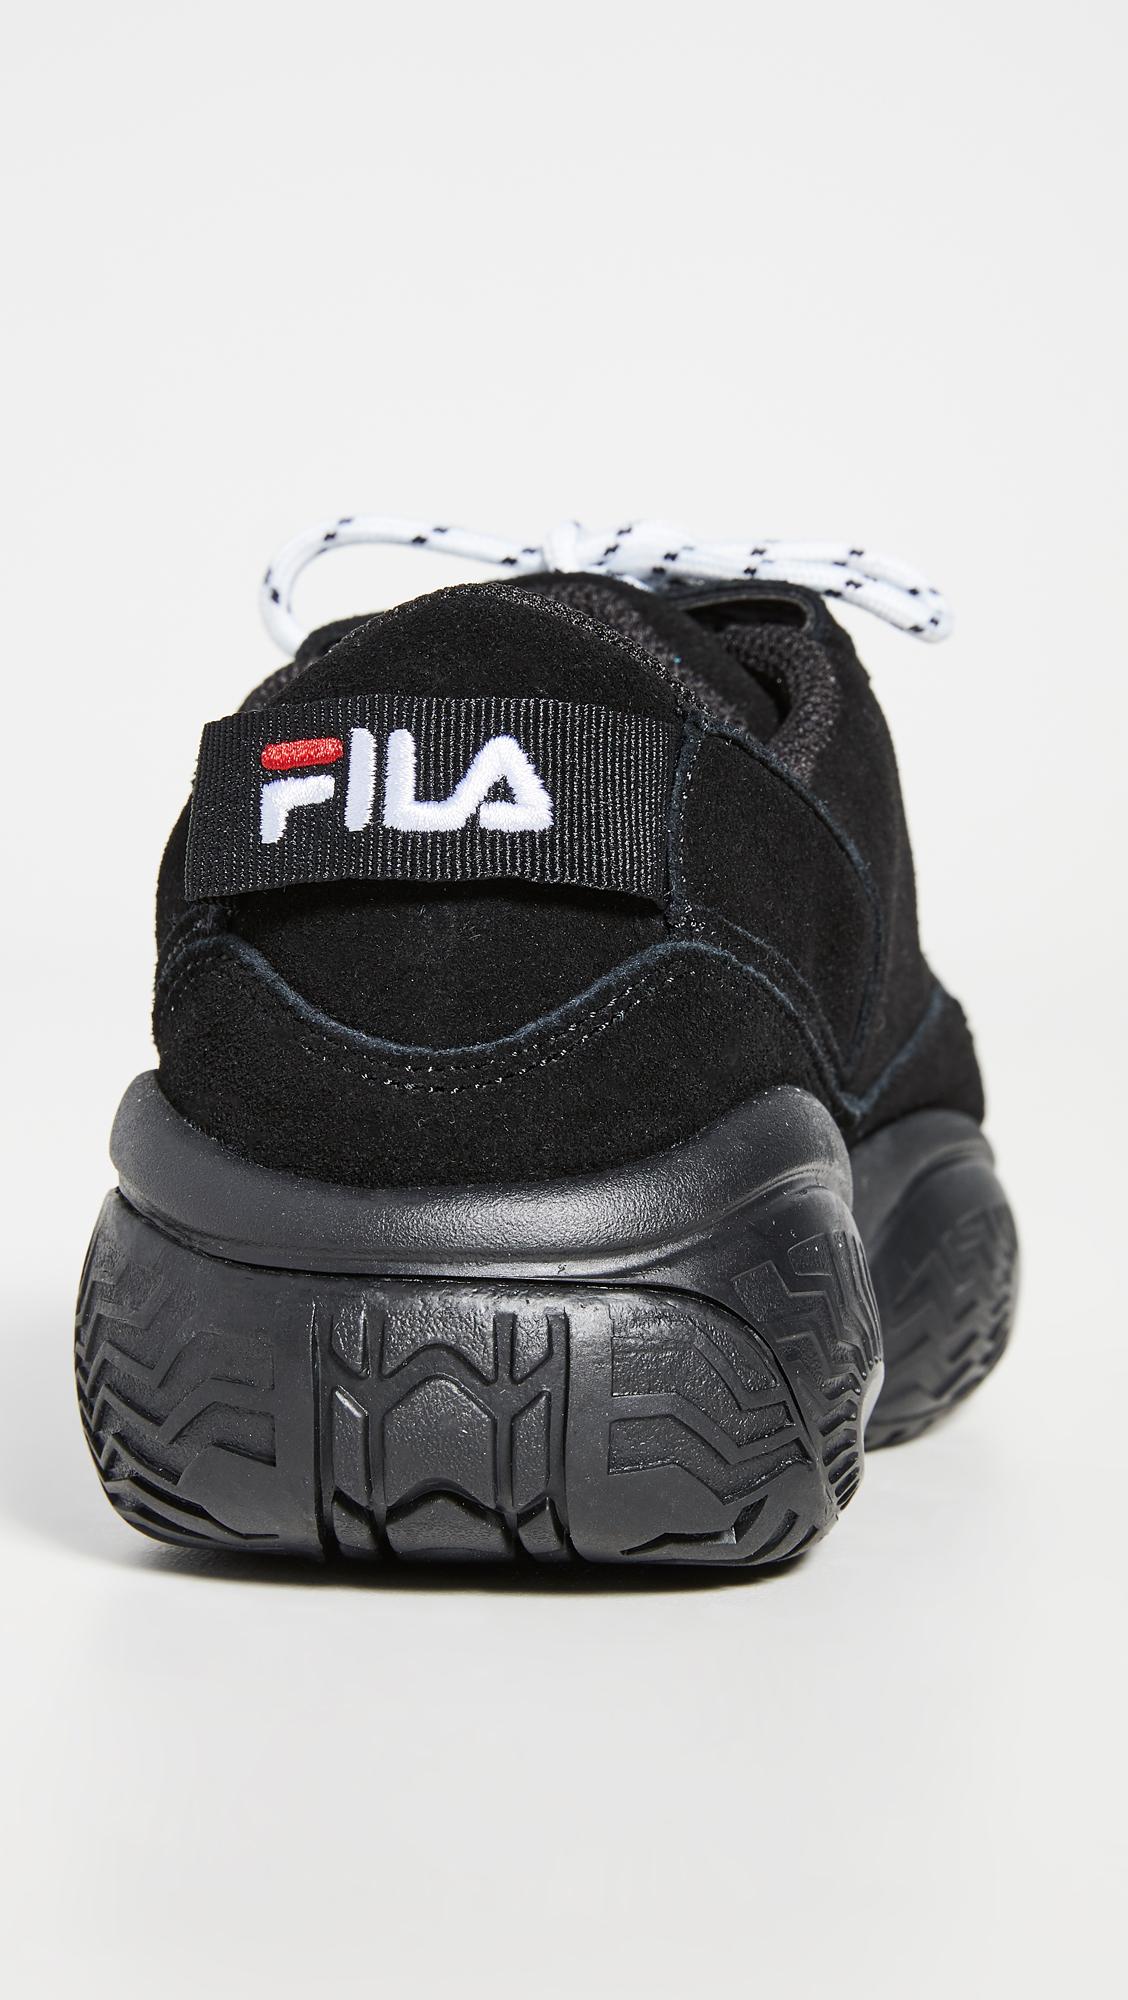 Fila Concours Low Sneakers in Black | Lyst